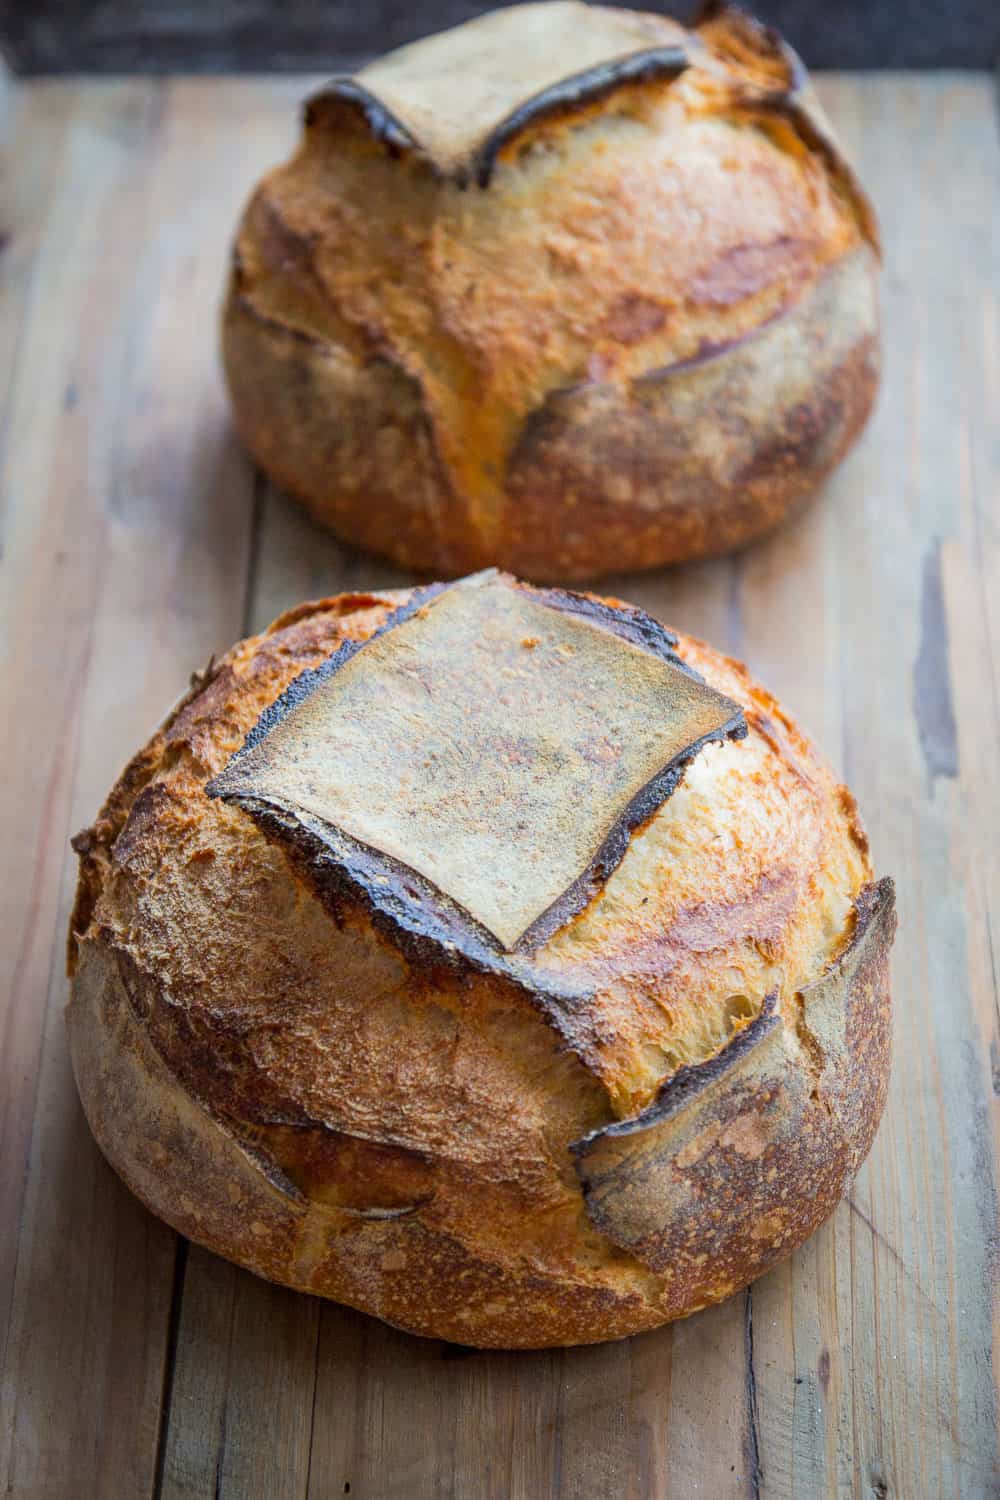 2 round loaves of tartine recipe bread on wood board